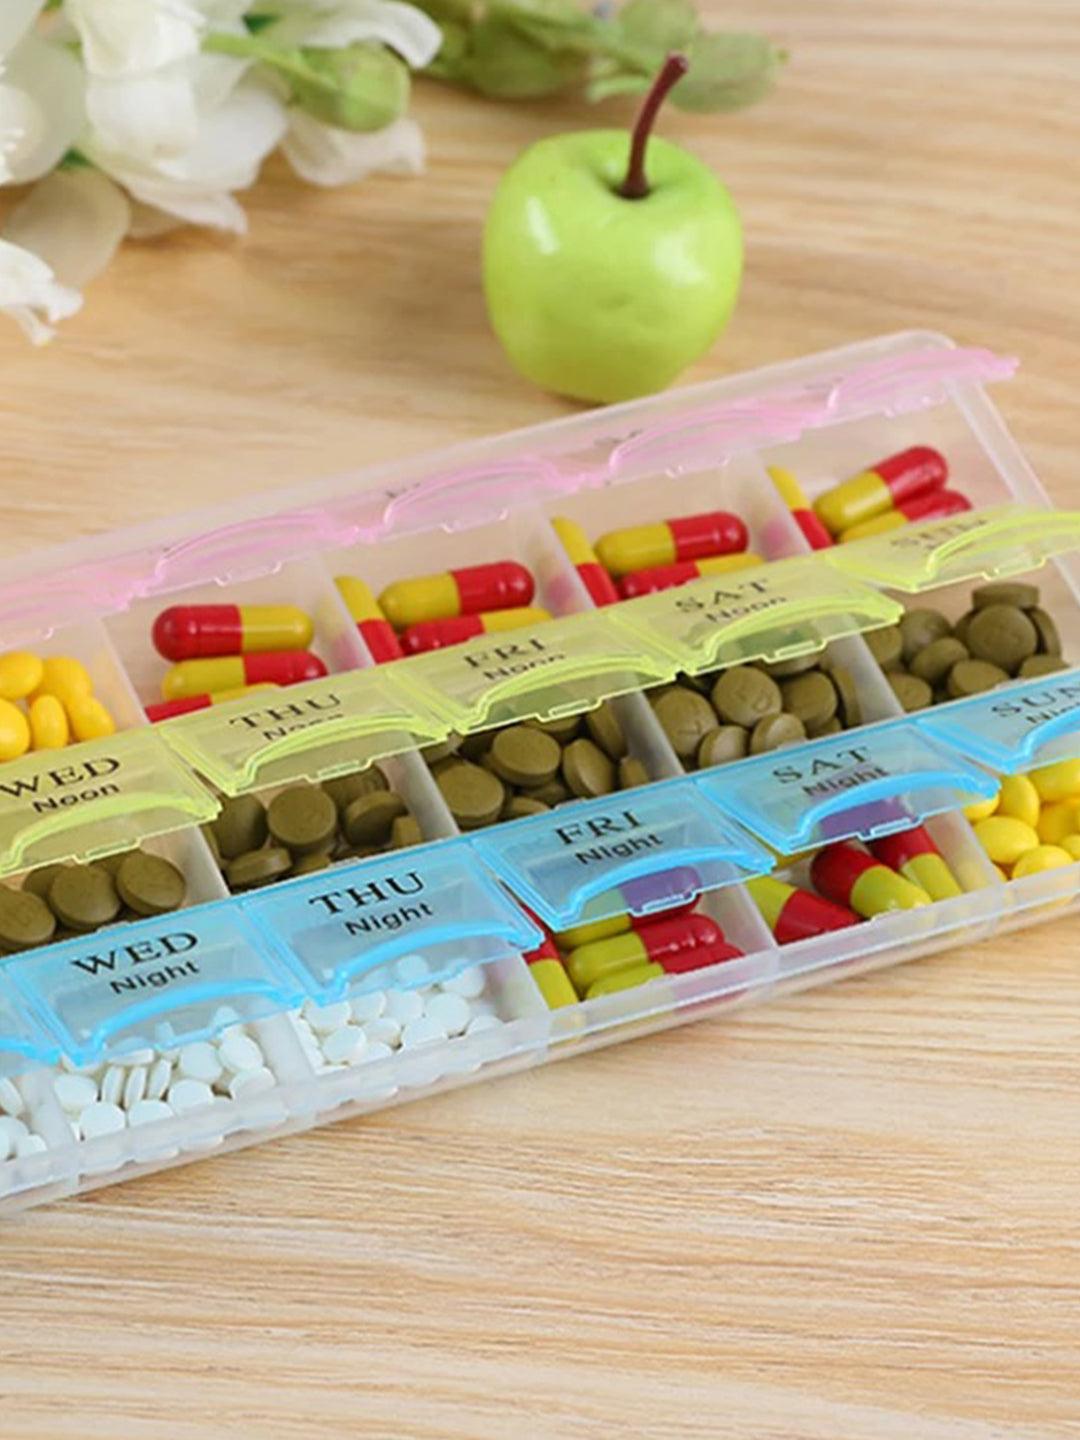 Weekly Pill Box, Multicolour, Plastic - MARKET 99